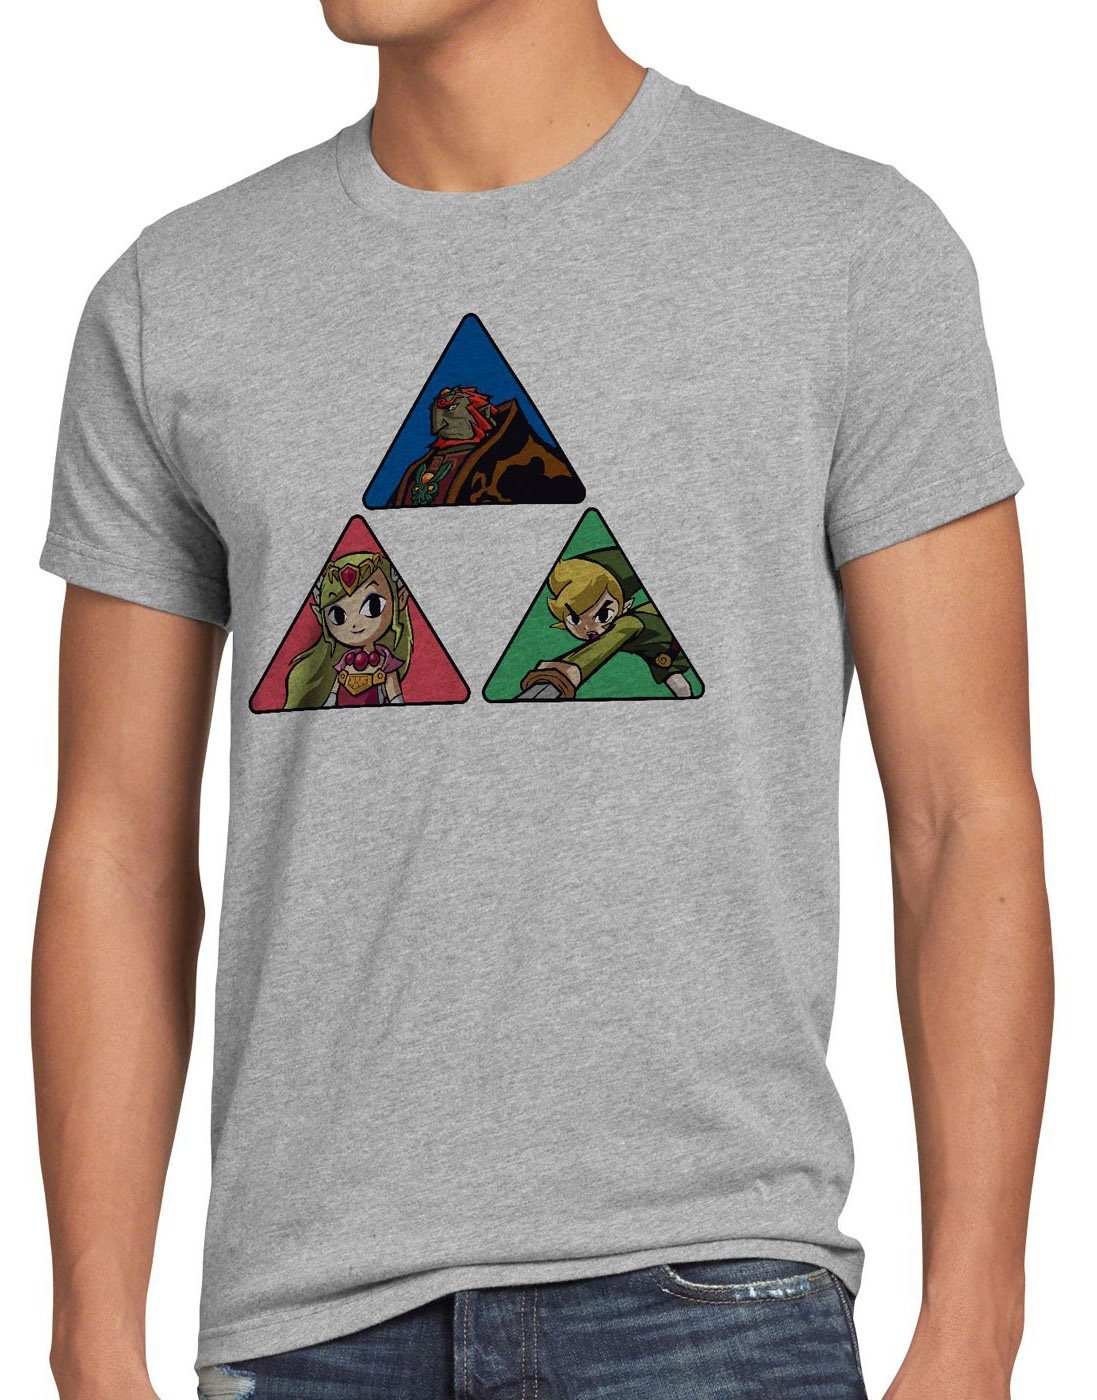 breath zelda Triforce game Link legend of style3 T-Shirt Print-Shirt Gamer boy Herren meliert wild grau Hyrule